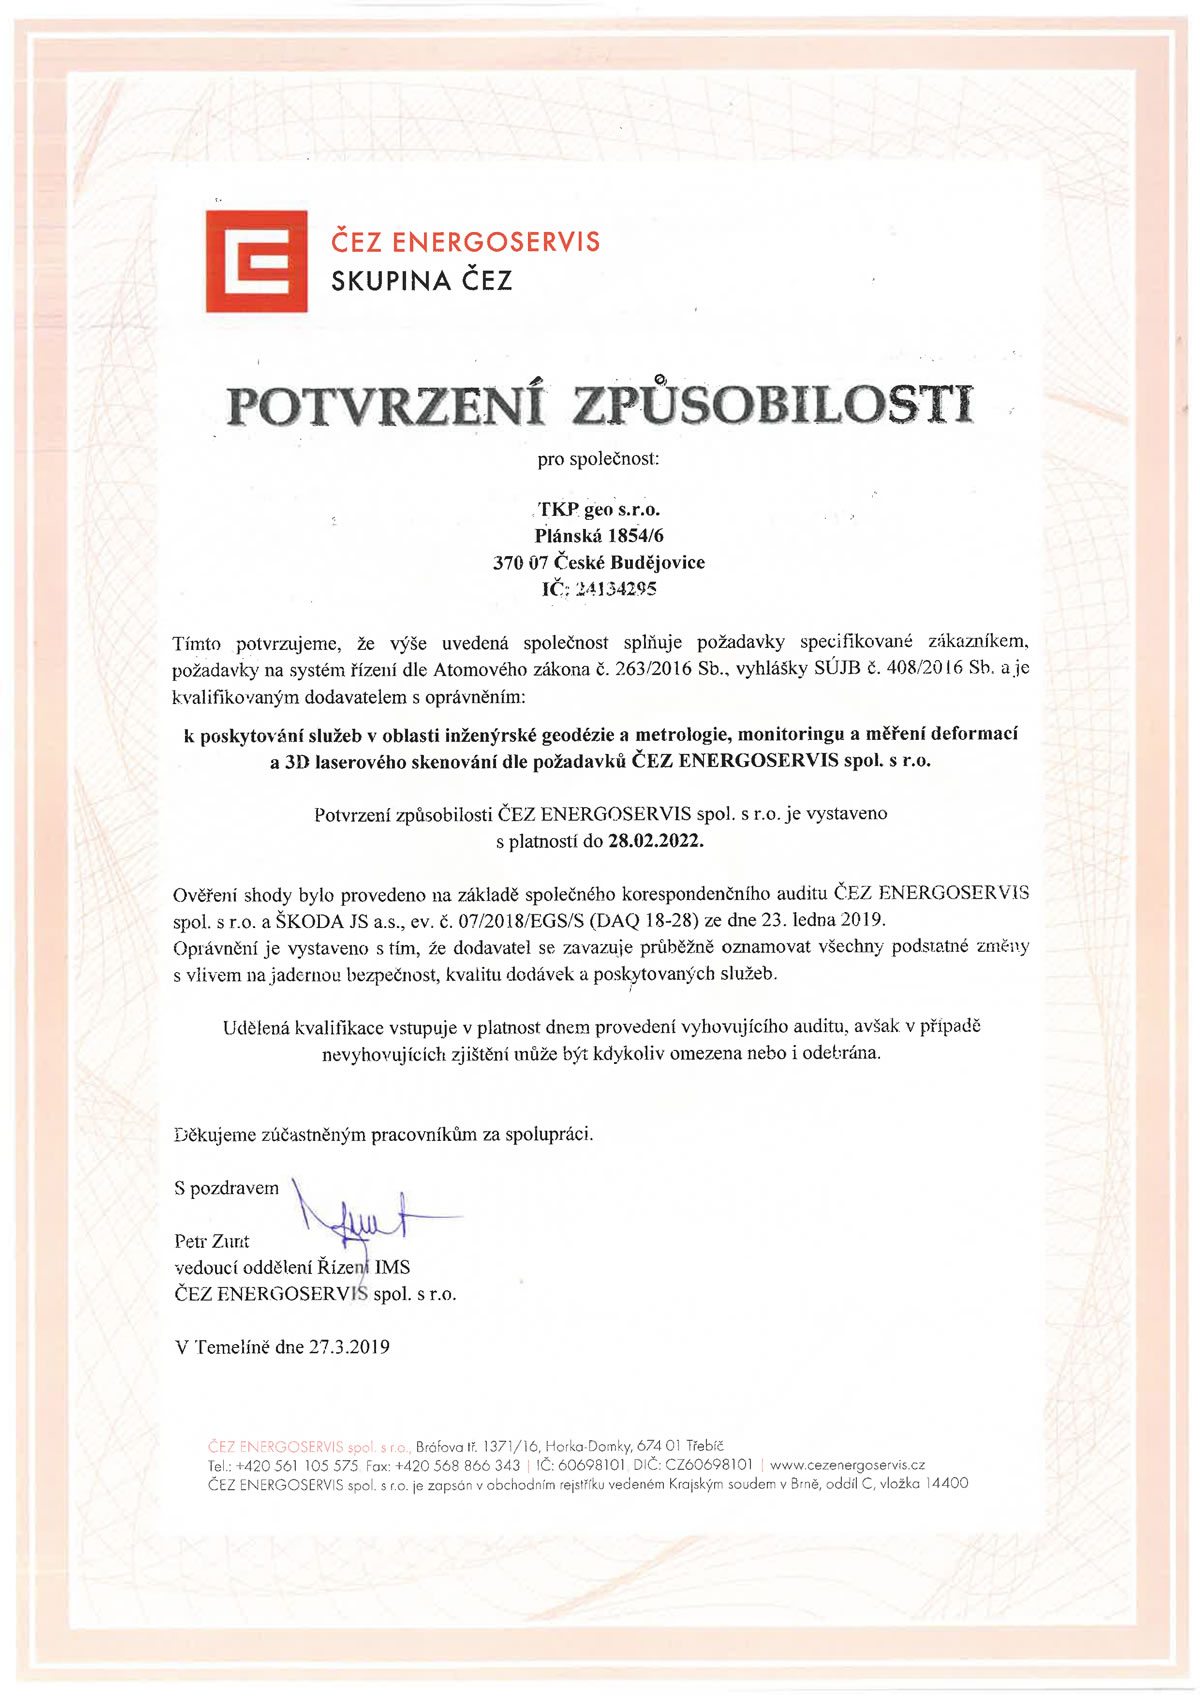 tkp-geo-certifikat-CEZ-Energoservis-2019-2022 / GeoBusiness